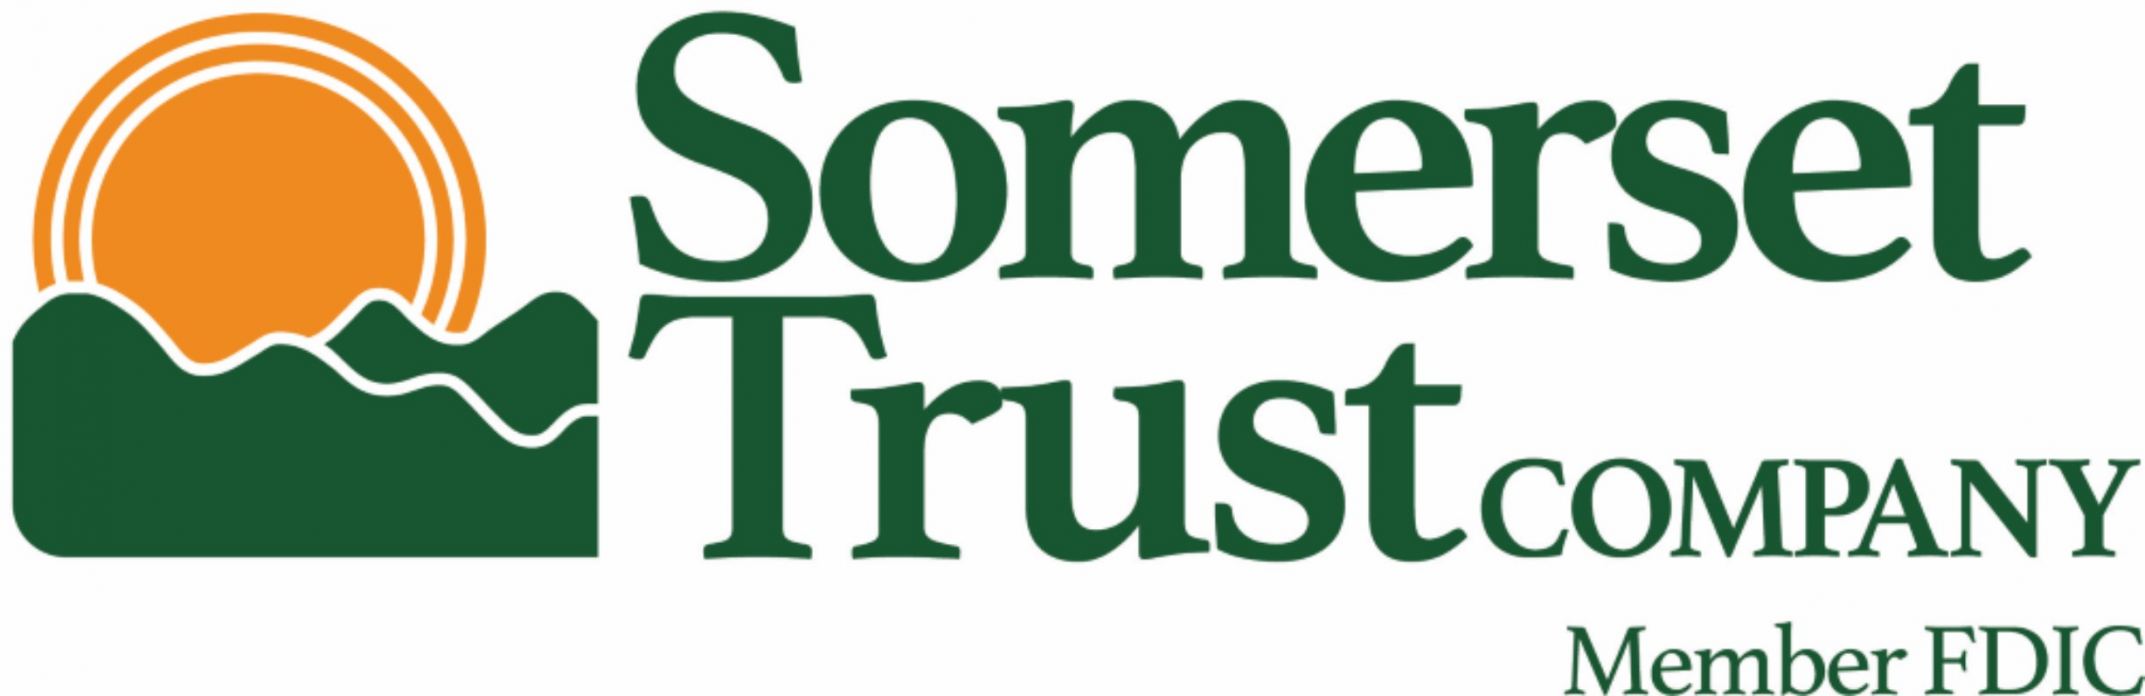 somersettrustcompany Logo